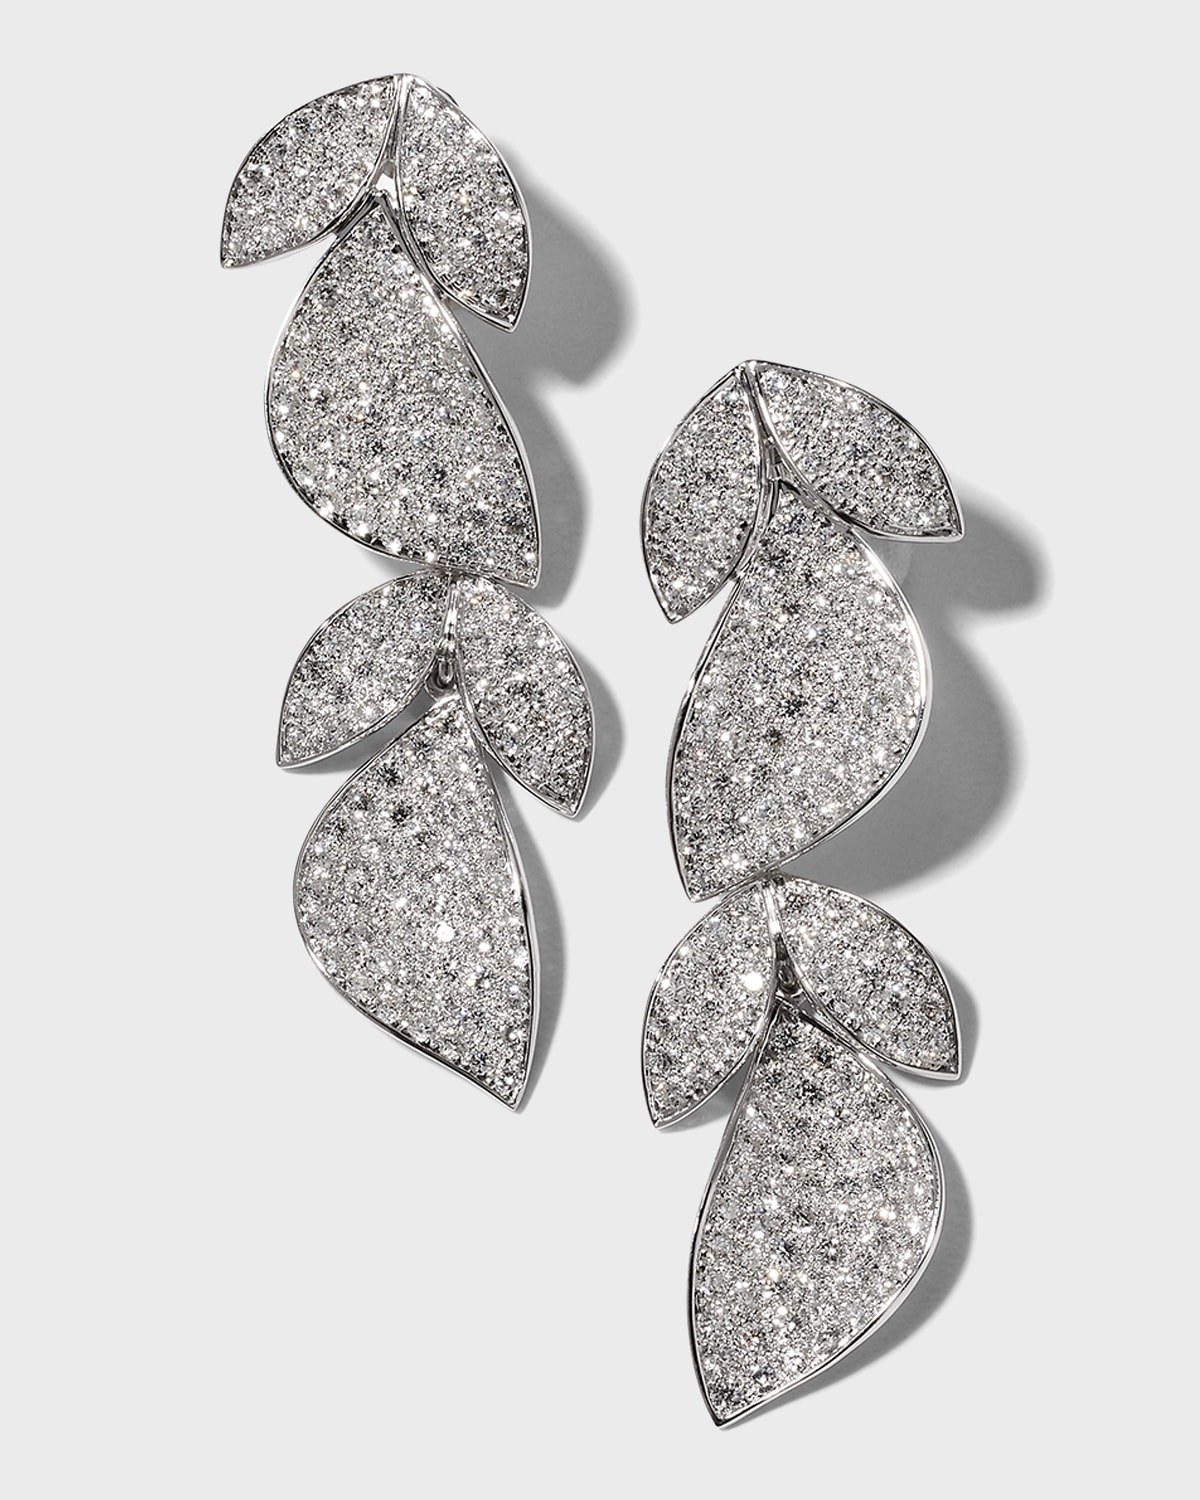 Alexander Laut White Gold Pave Diamond Leaf Earrings